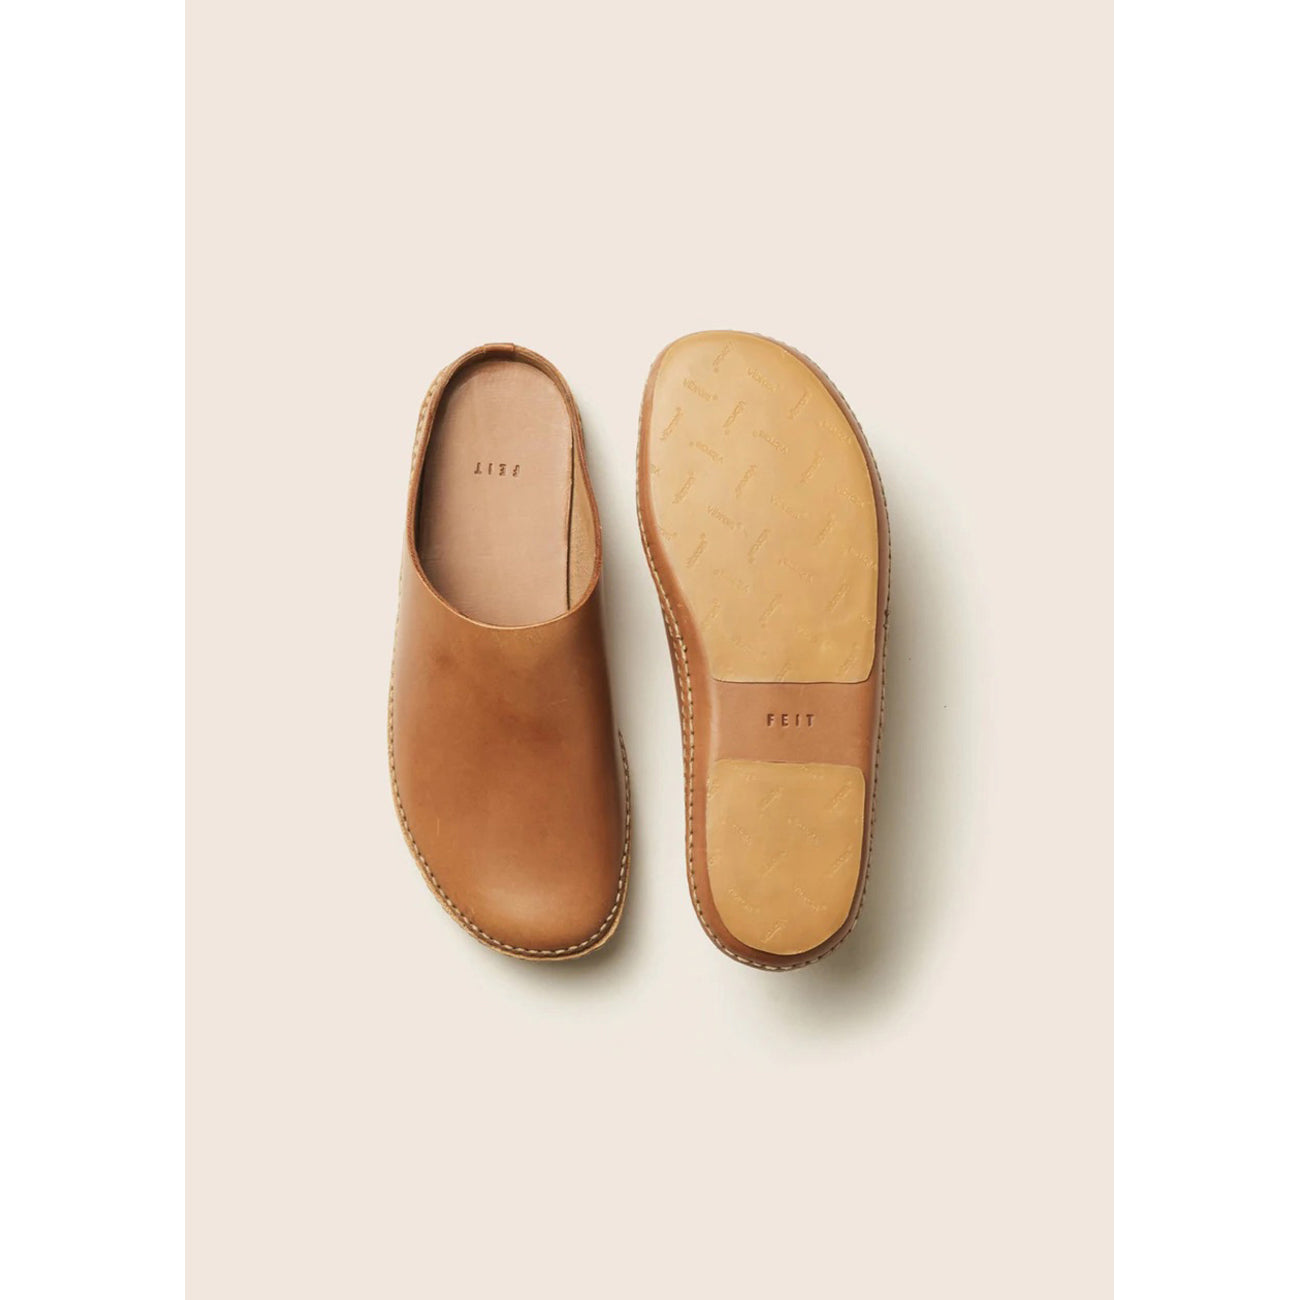 outdoor slipper in tan